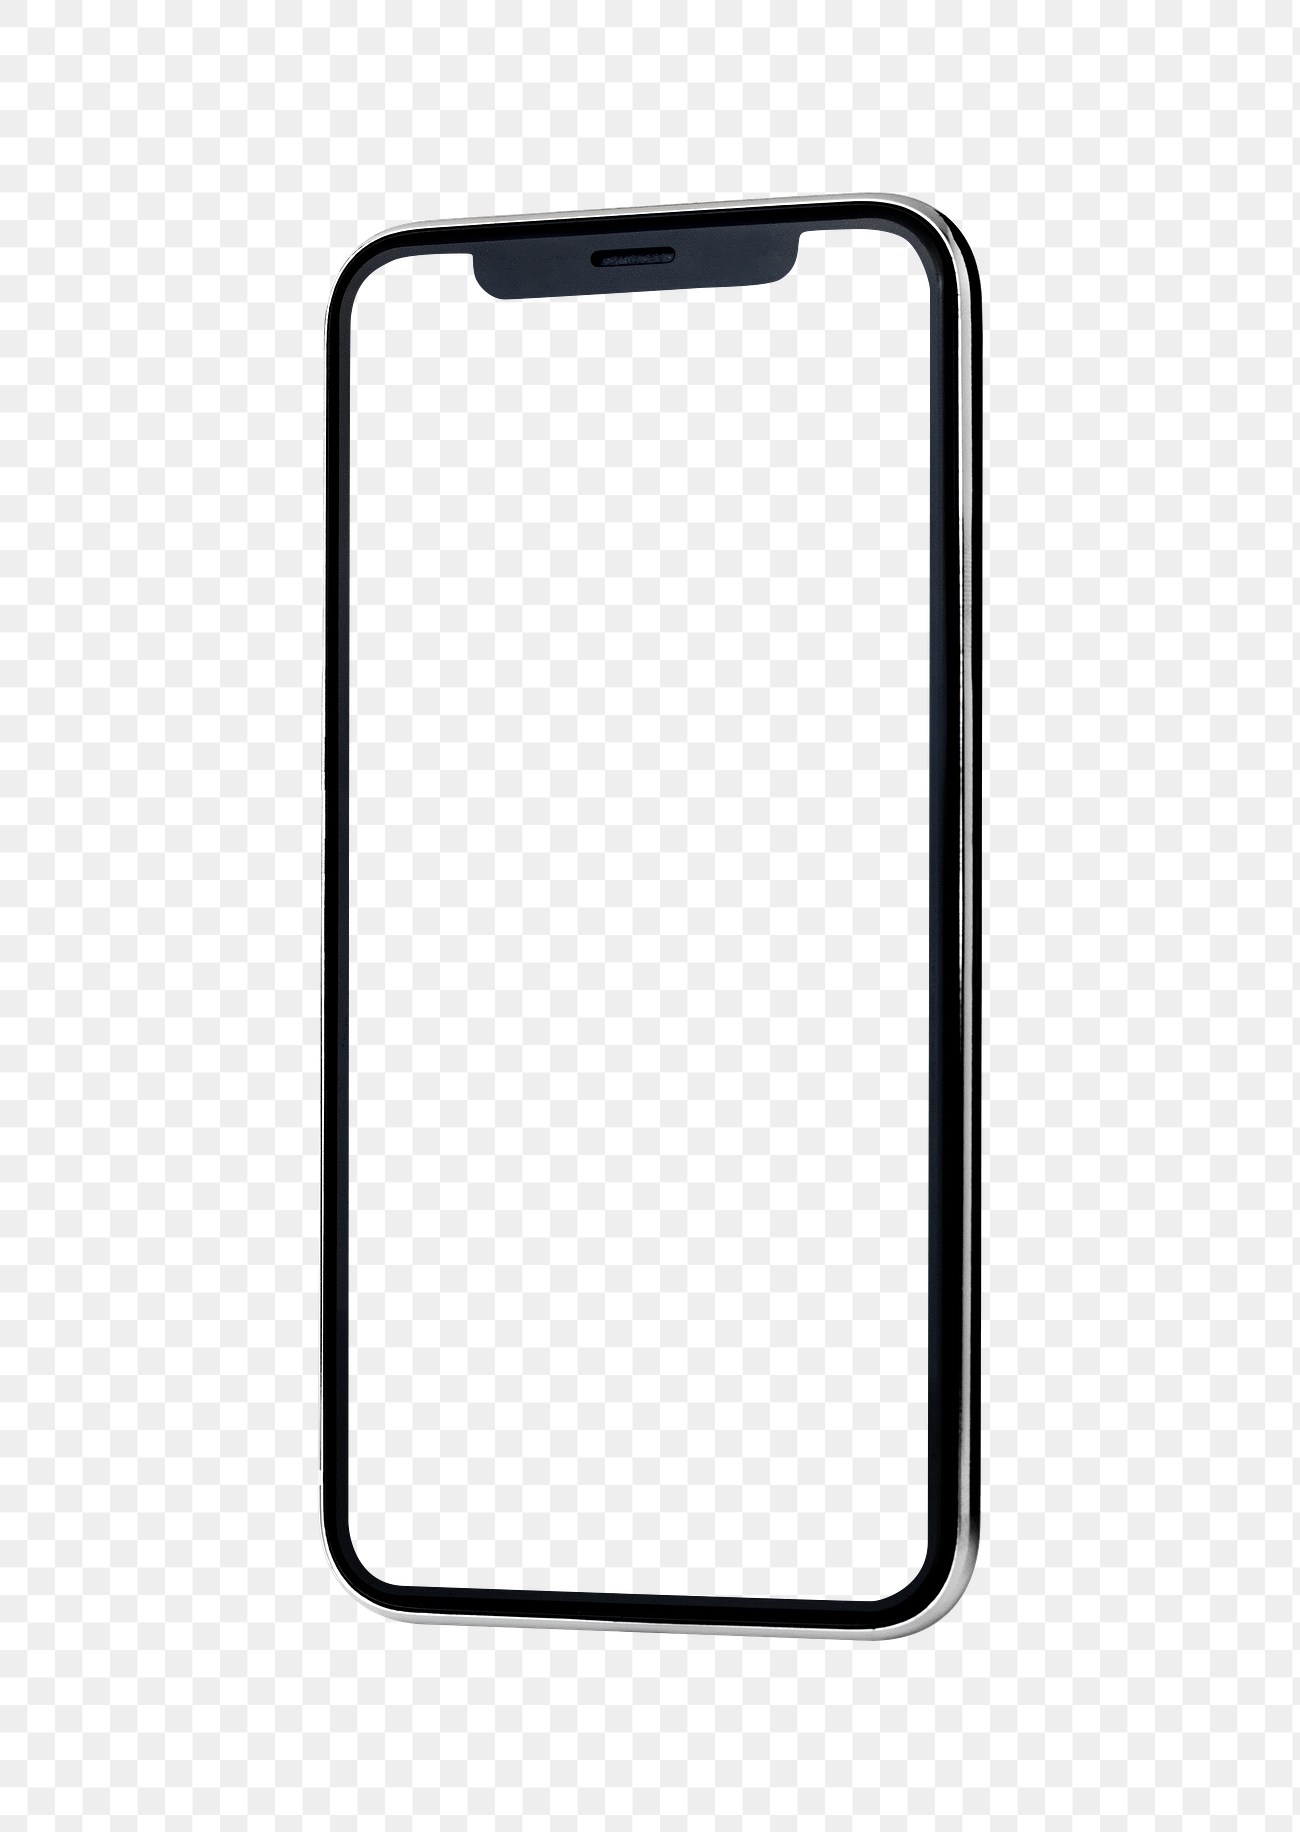 Phone mockup  model png  Free stock illustration High 